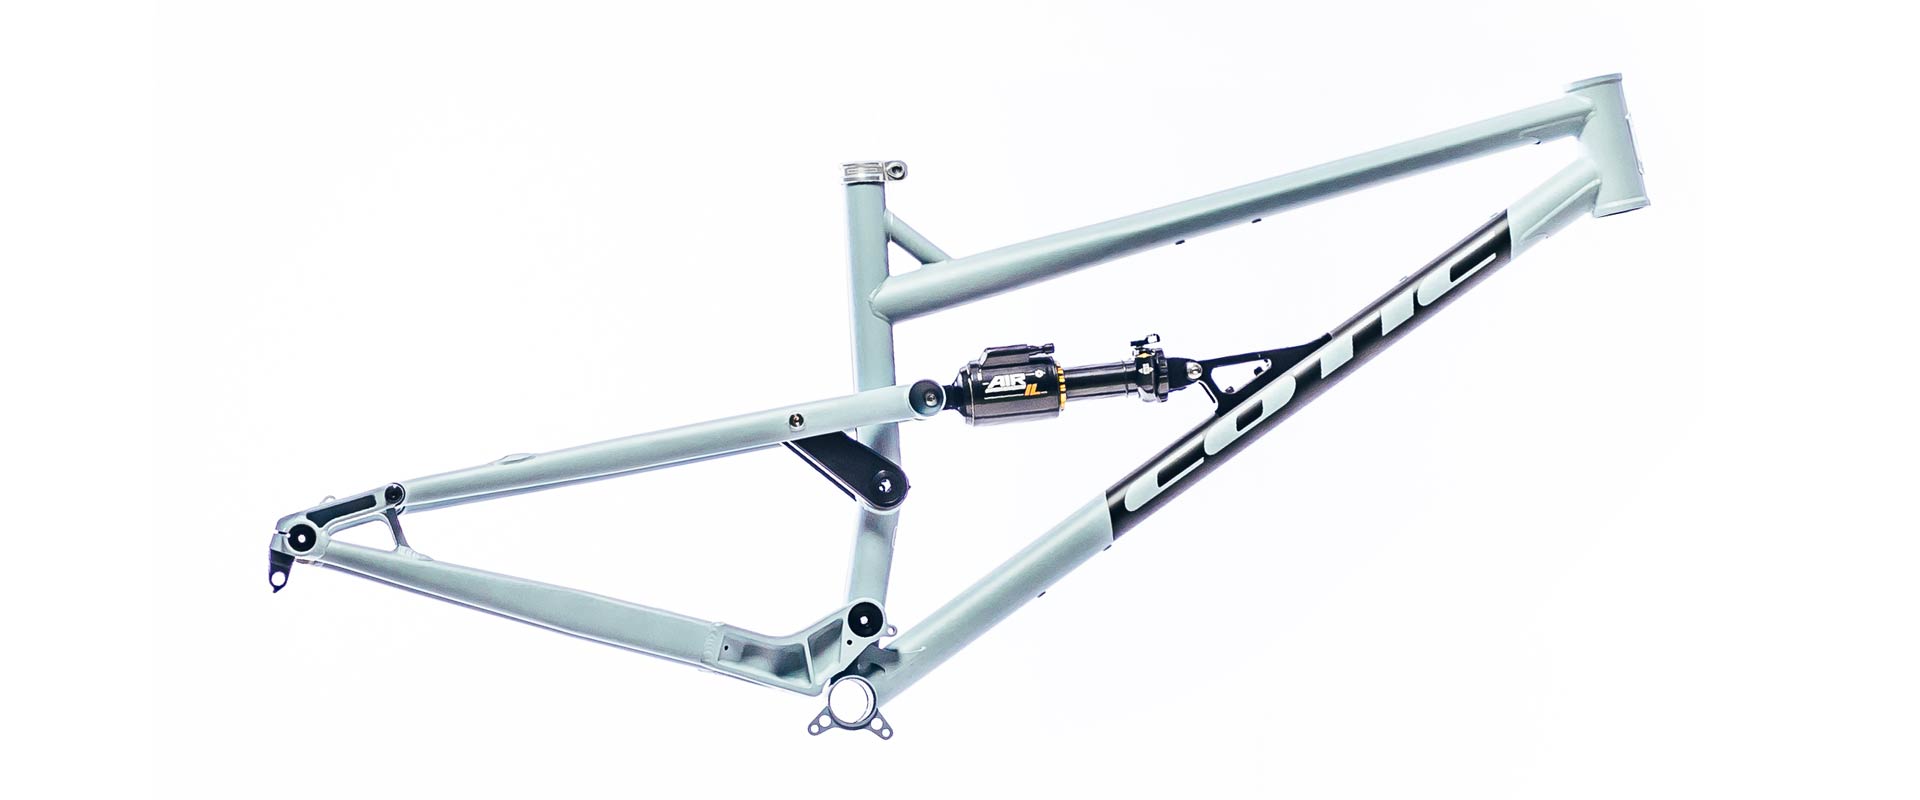 Cotic Jeht in Matte Nimbus, steel full suspension mountain bike, 29 mountain bike, 140mm travel, reynolds 853, long geometry